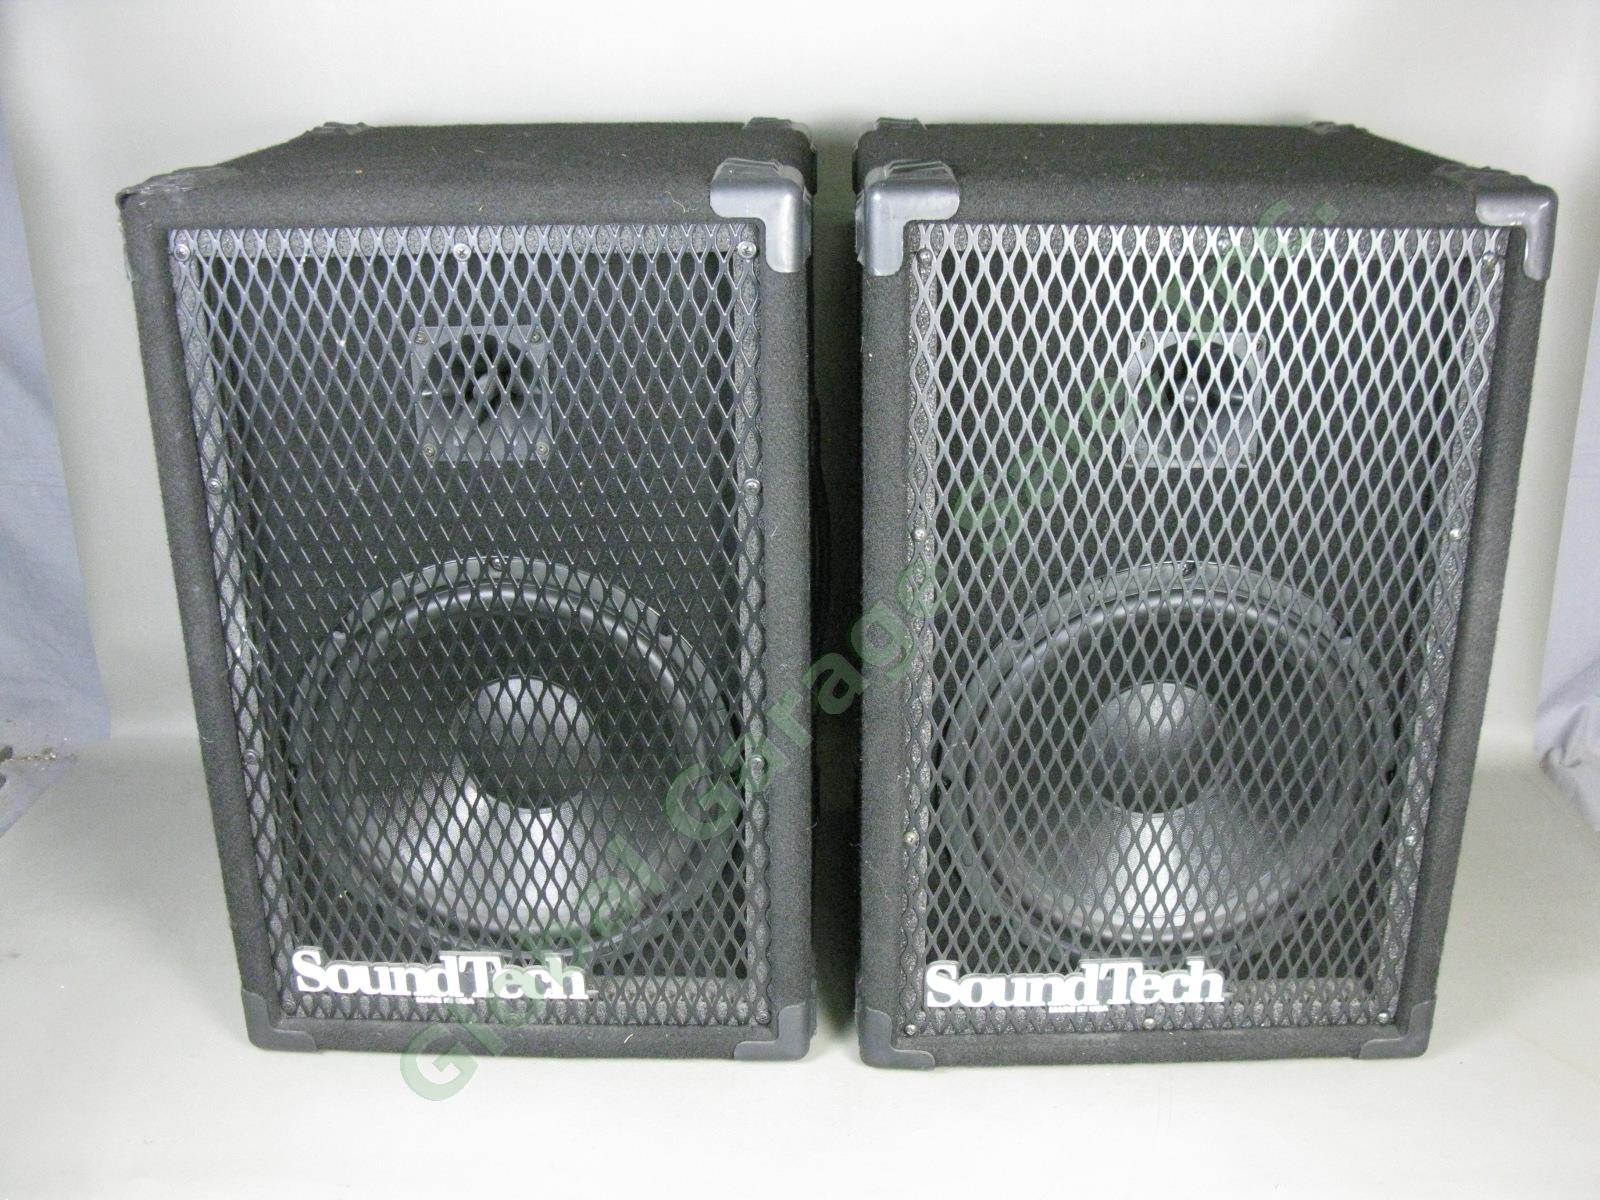 2 Soundtech Model B2X 12" PA Monitor Speakers 110 Watts RMS